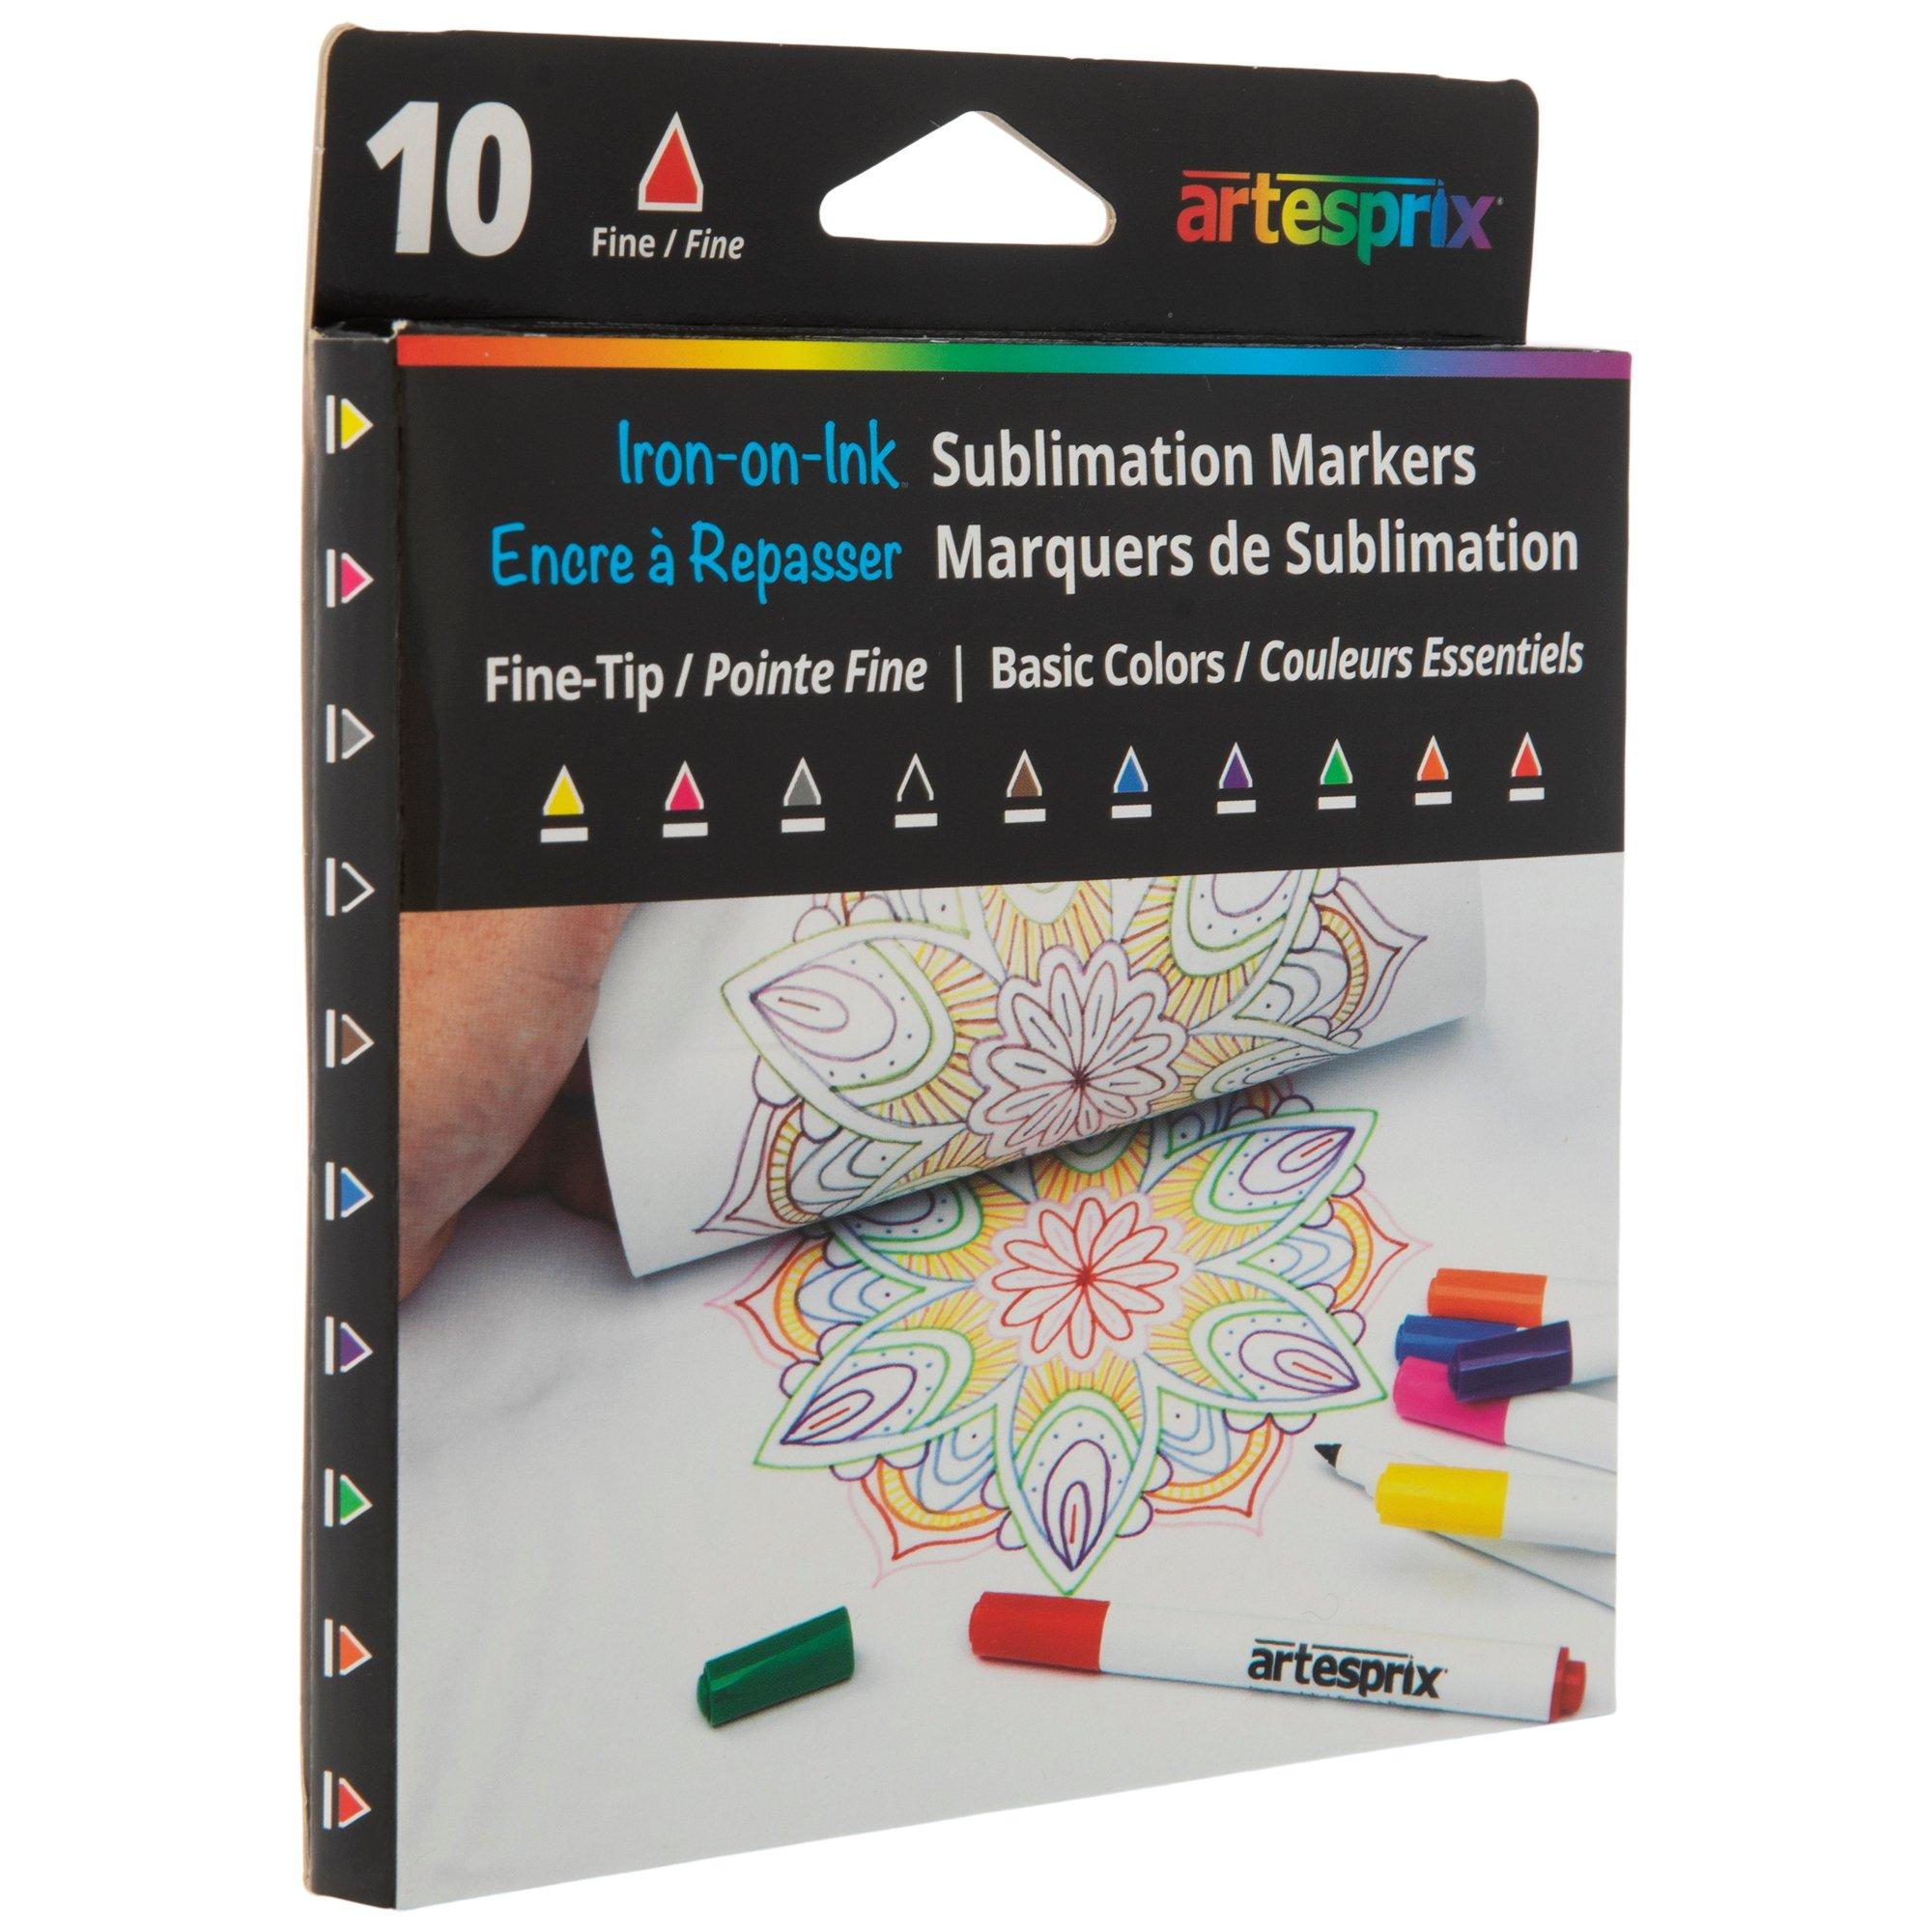 Basic Artesprix Sublimation Markers - 10 Piece Set, Hobby Lobby